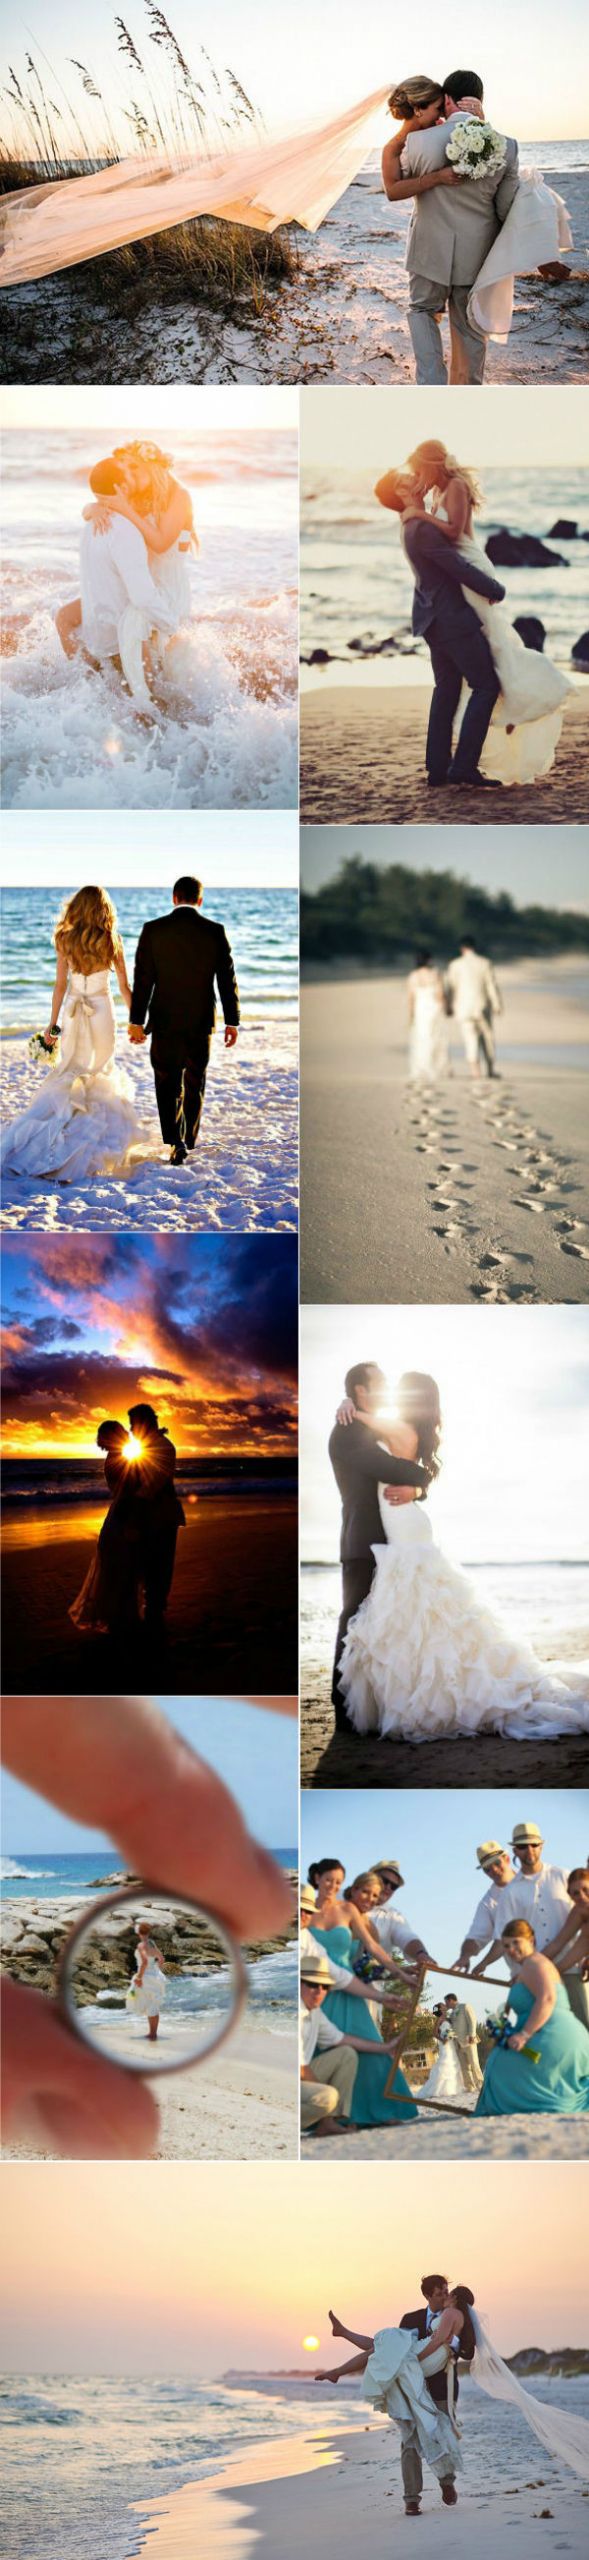 Beach Wedding Photo Ideas
 32 Beach Themed Wedding Ideas For 2016 Brides